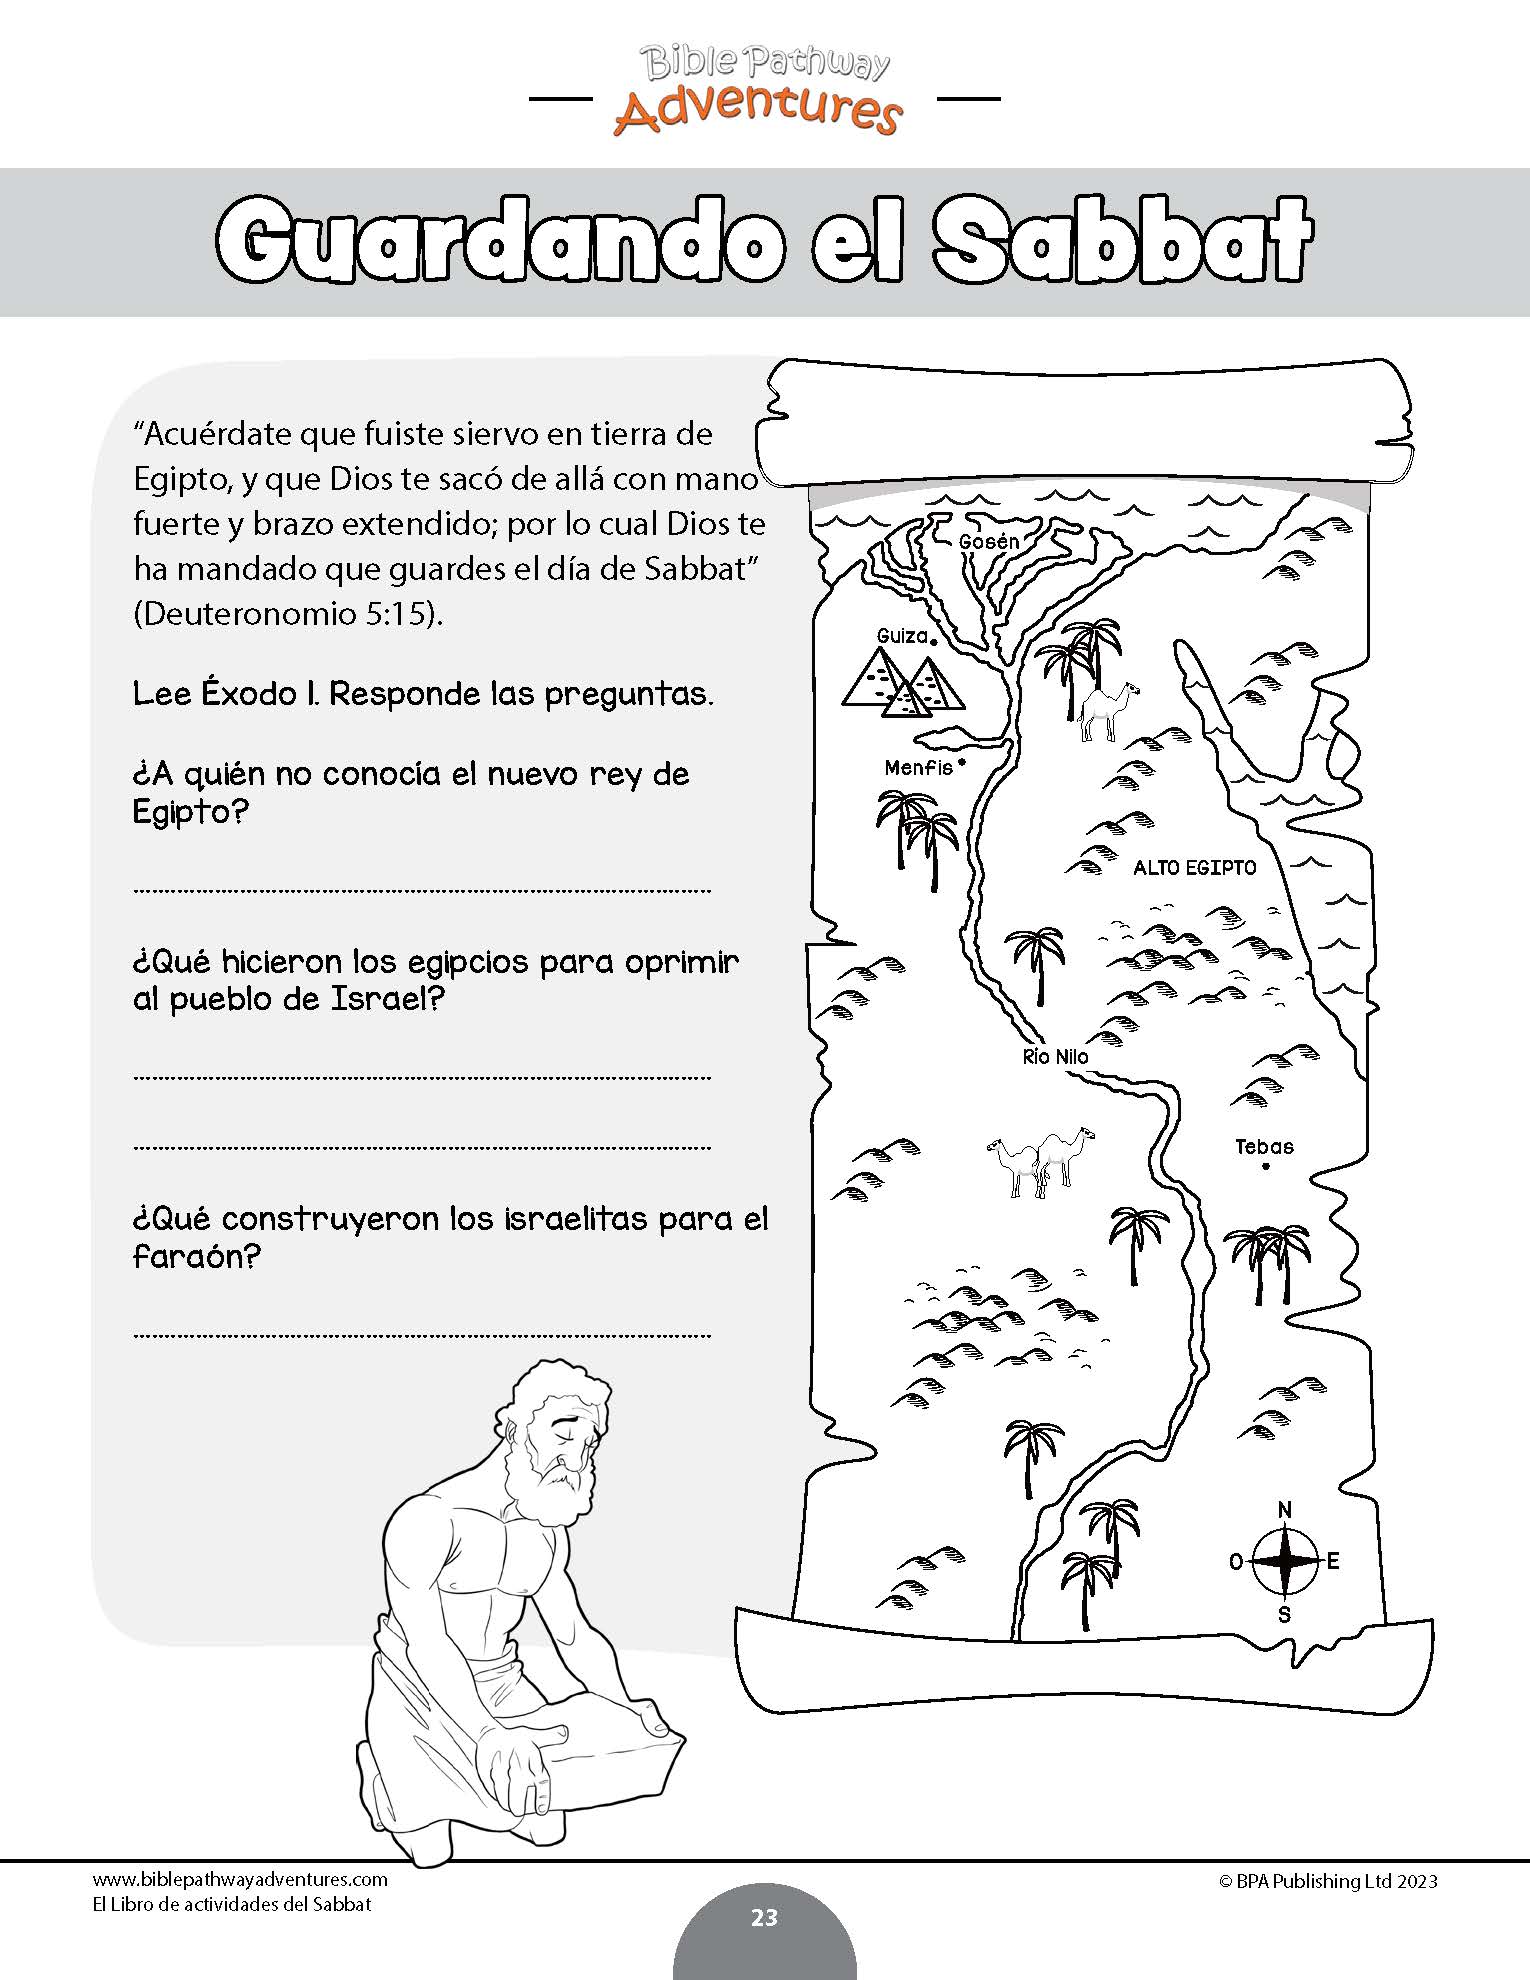 El Sabbat: Libro de actividades